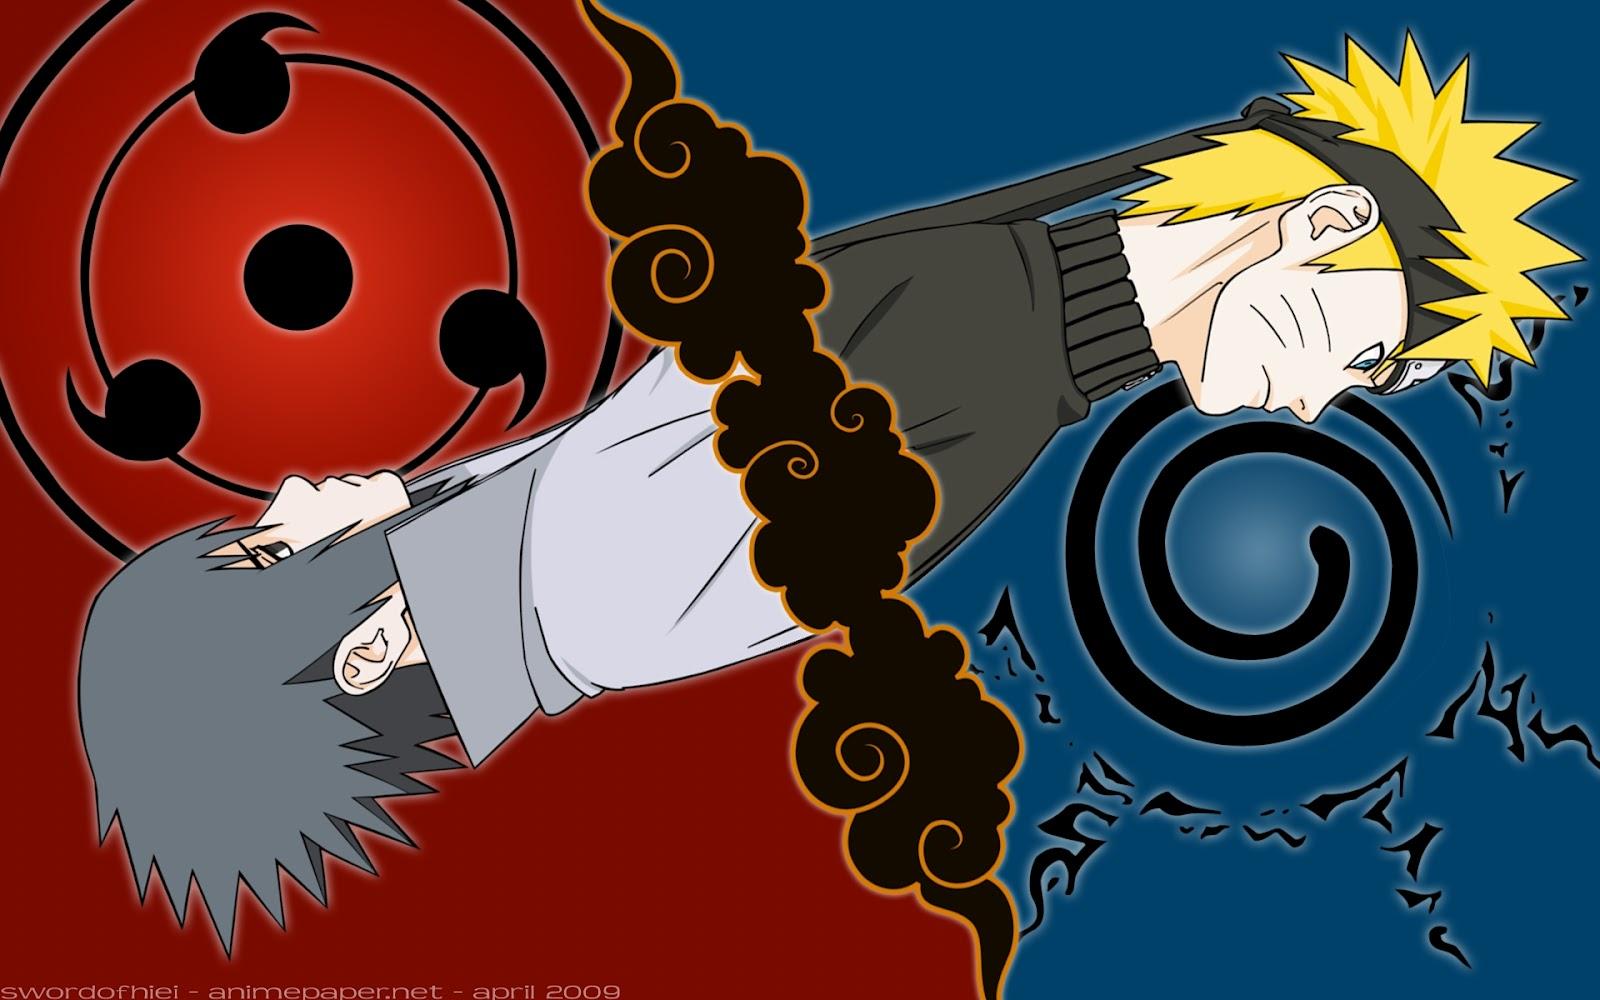 Naruto and Sasuke Wallpaper Image for Lumia